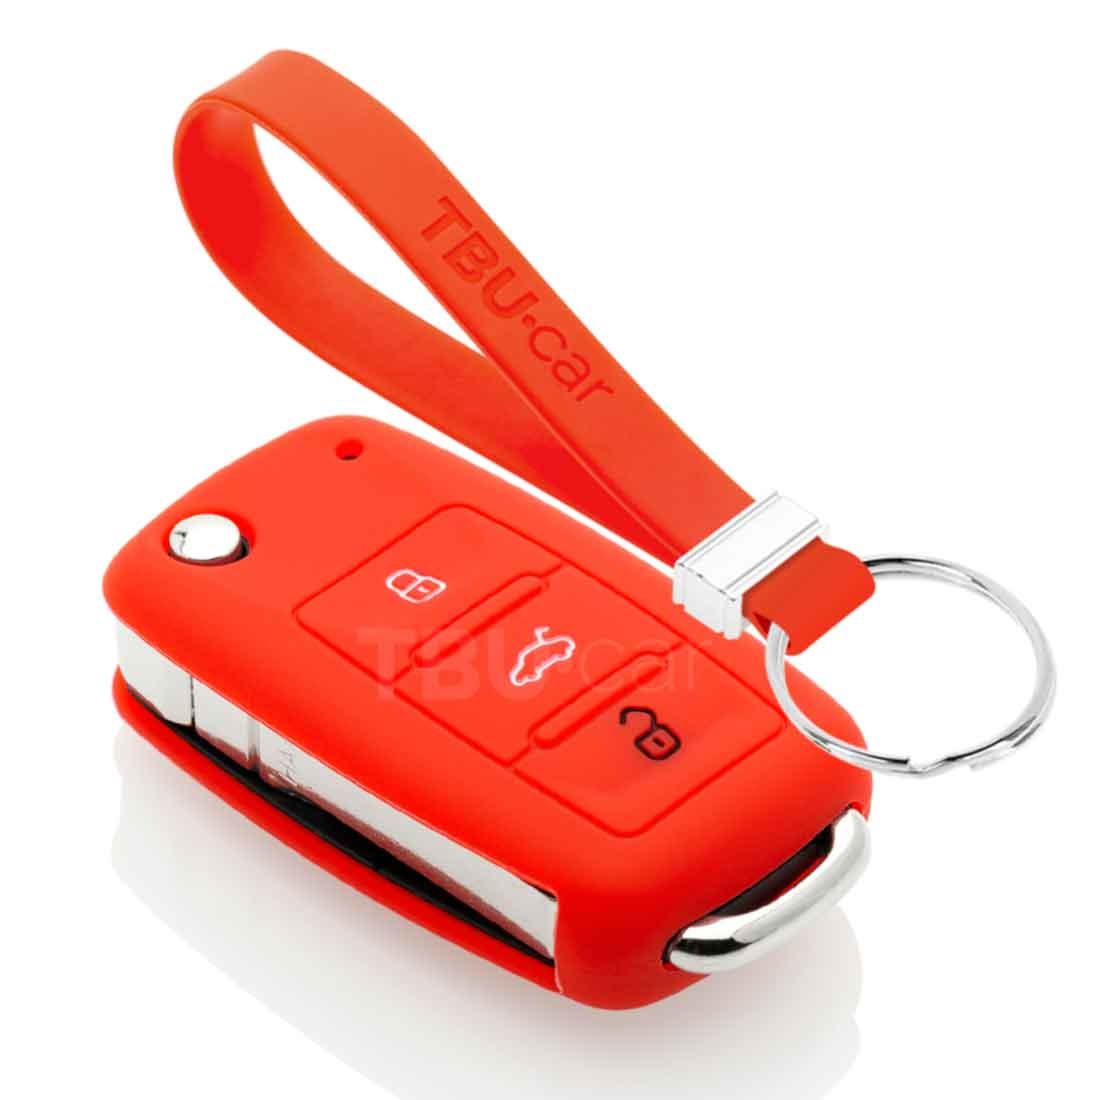 TBU car TBU car Autoschlüssel Hülle kompatibel mit Skoda 3 Tasten - Schutzhülle aus Silikon - Auto Schlüsselhülle Cover in Rot